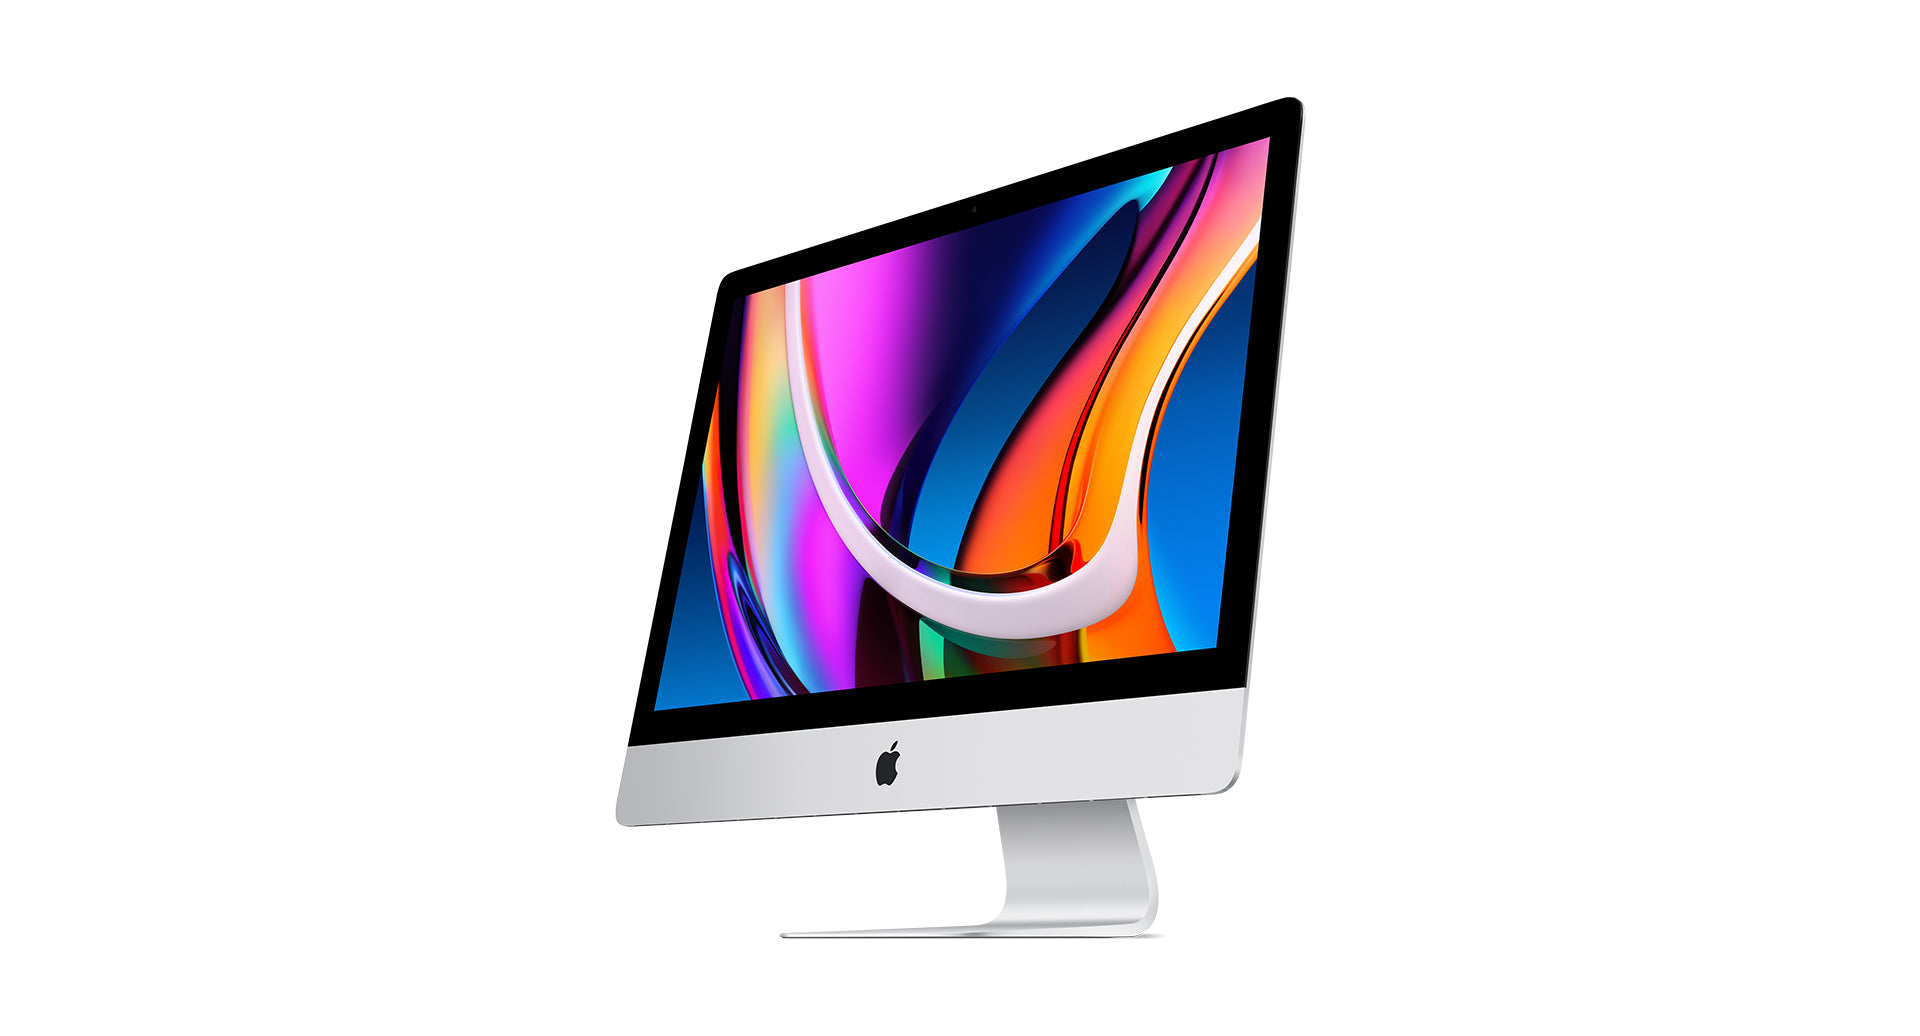 27-inch iMac get a major update